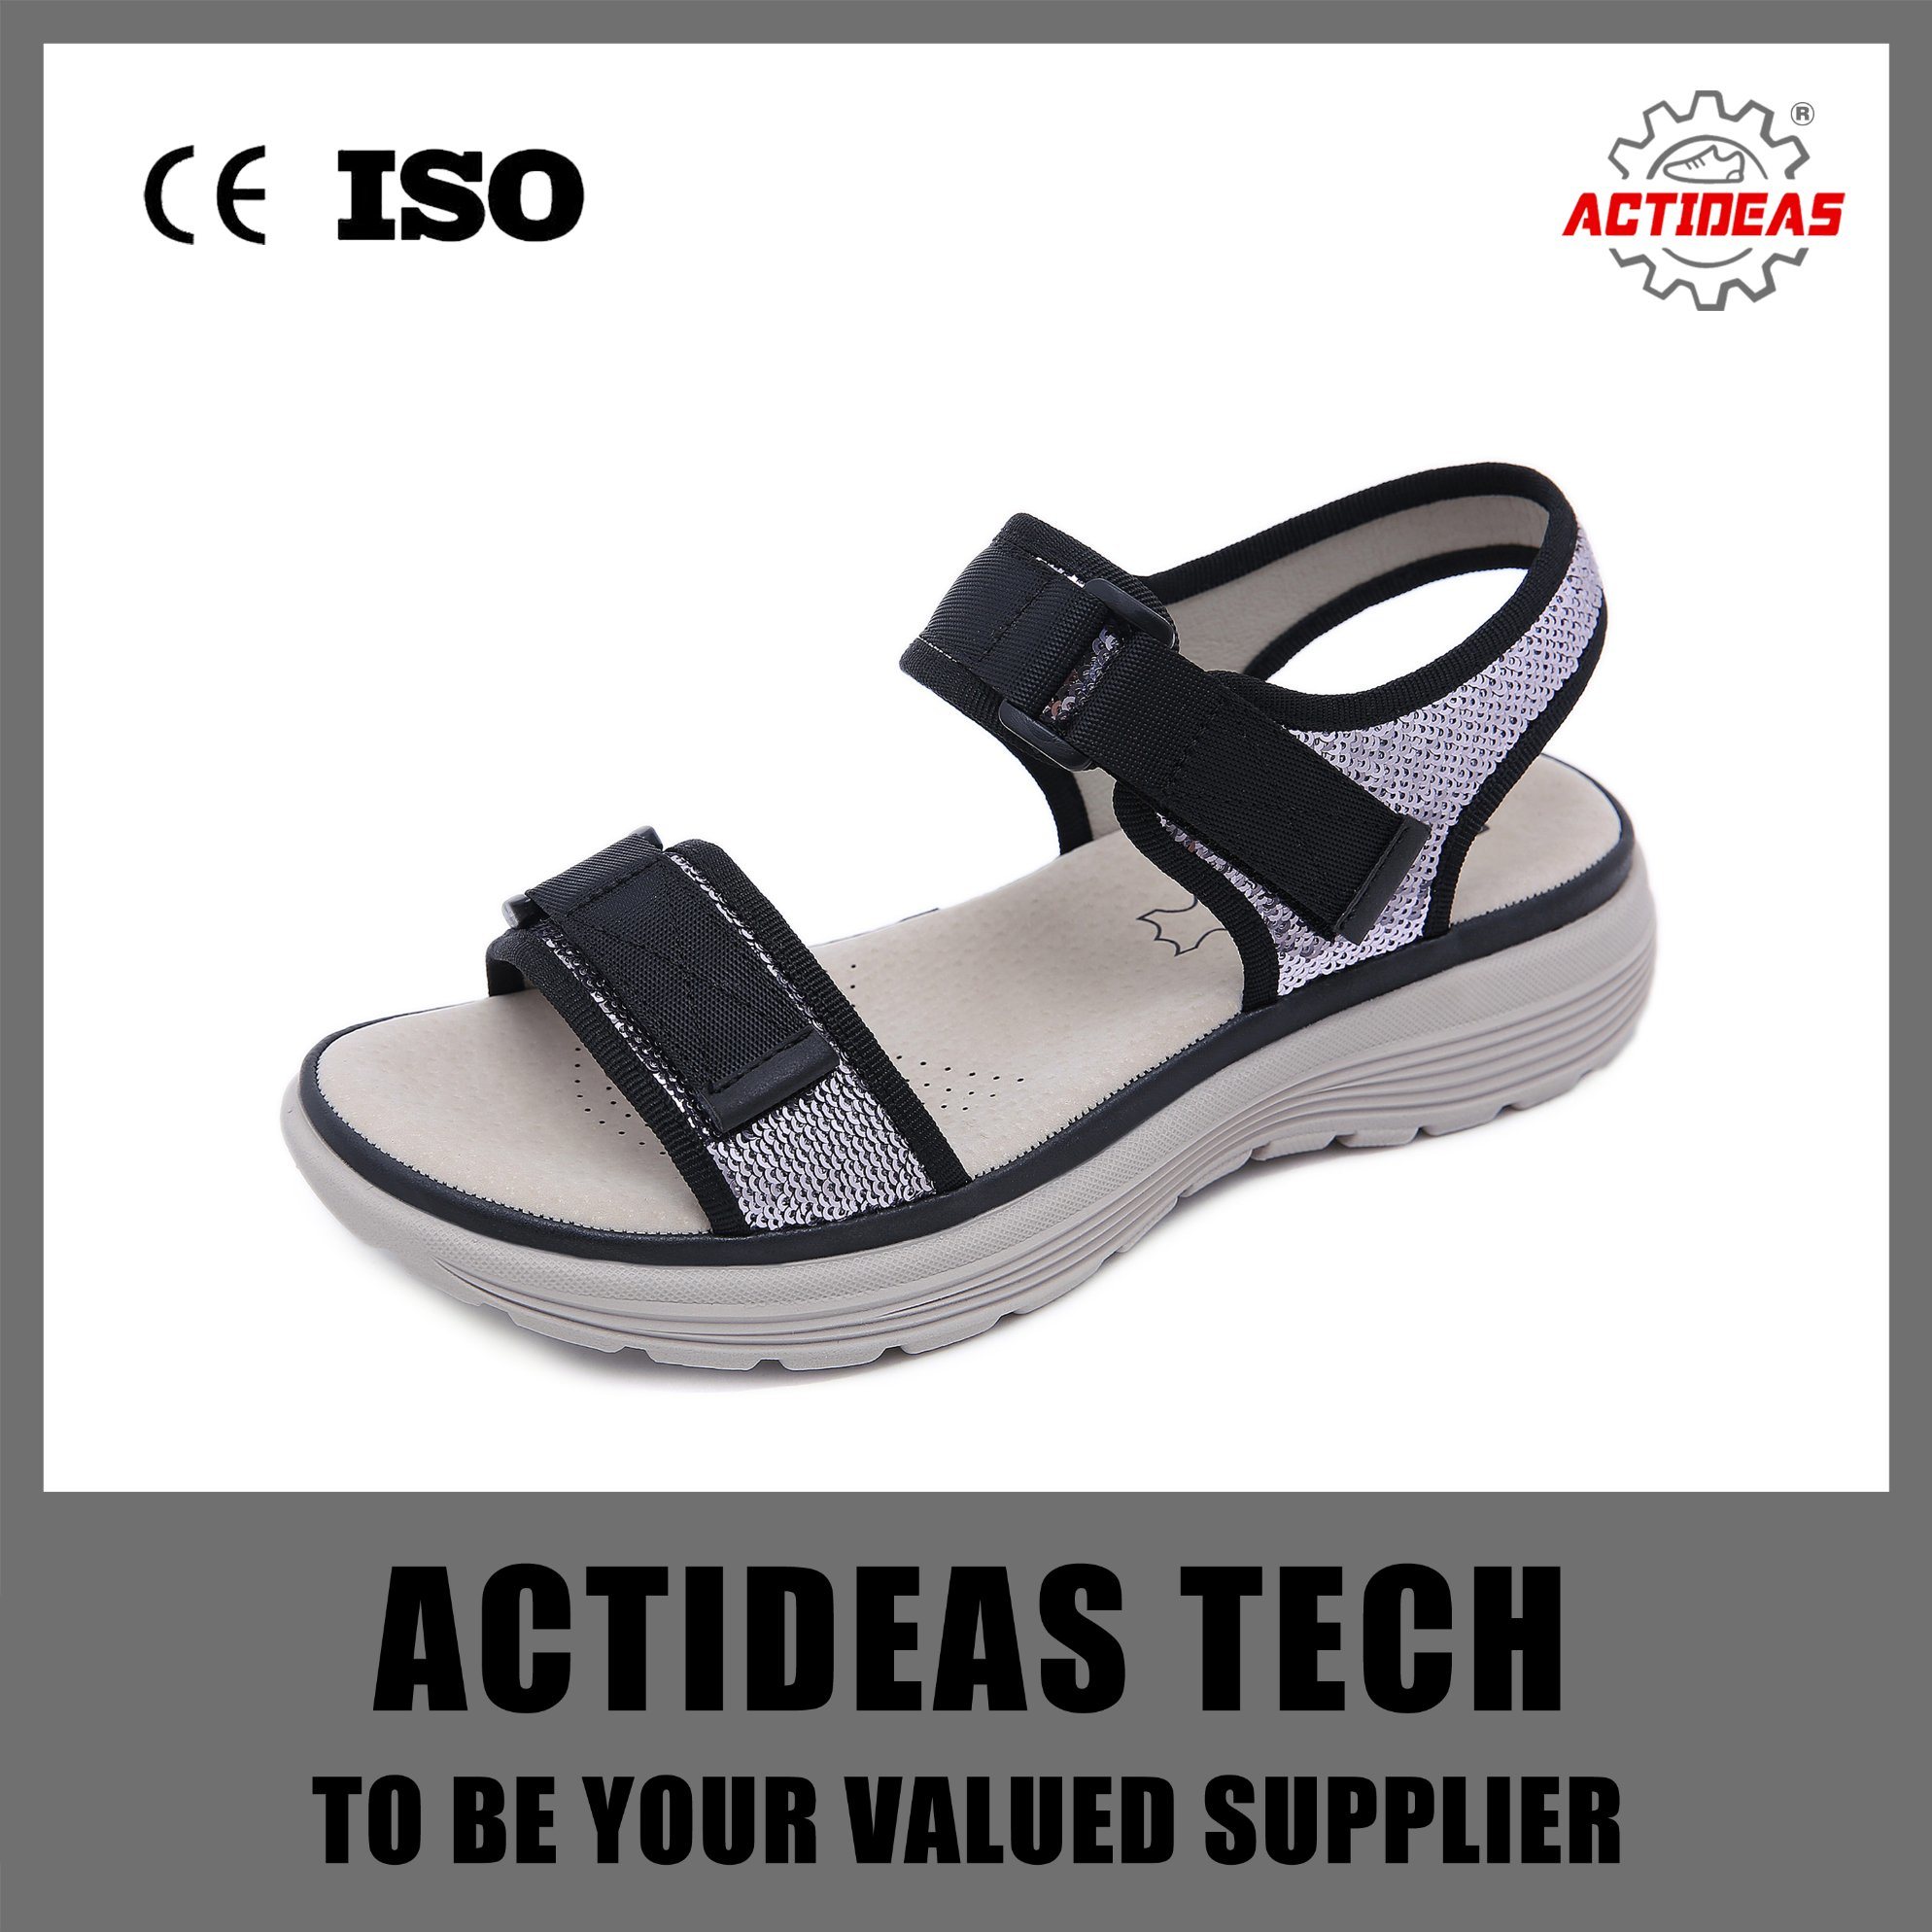 Ladies Adjustable Straps Slide Sandals Comfort with Concealed Support Water Resistant Wedge Sandals